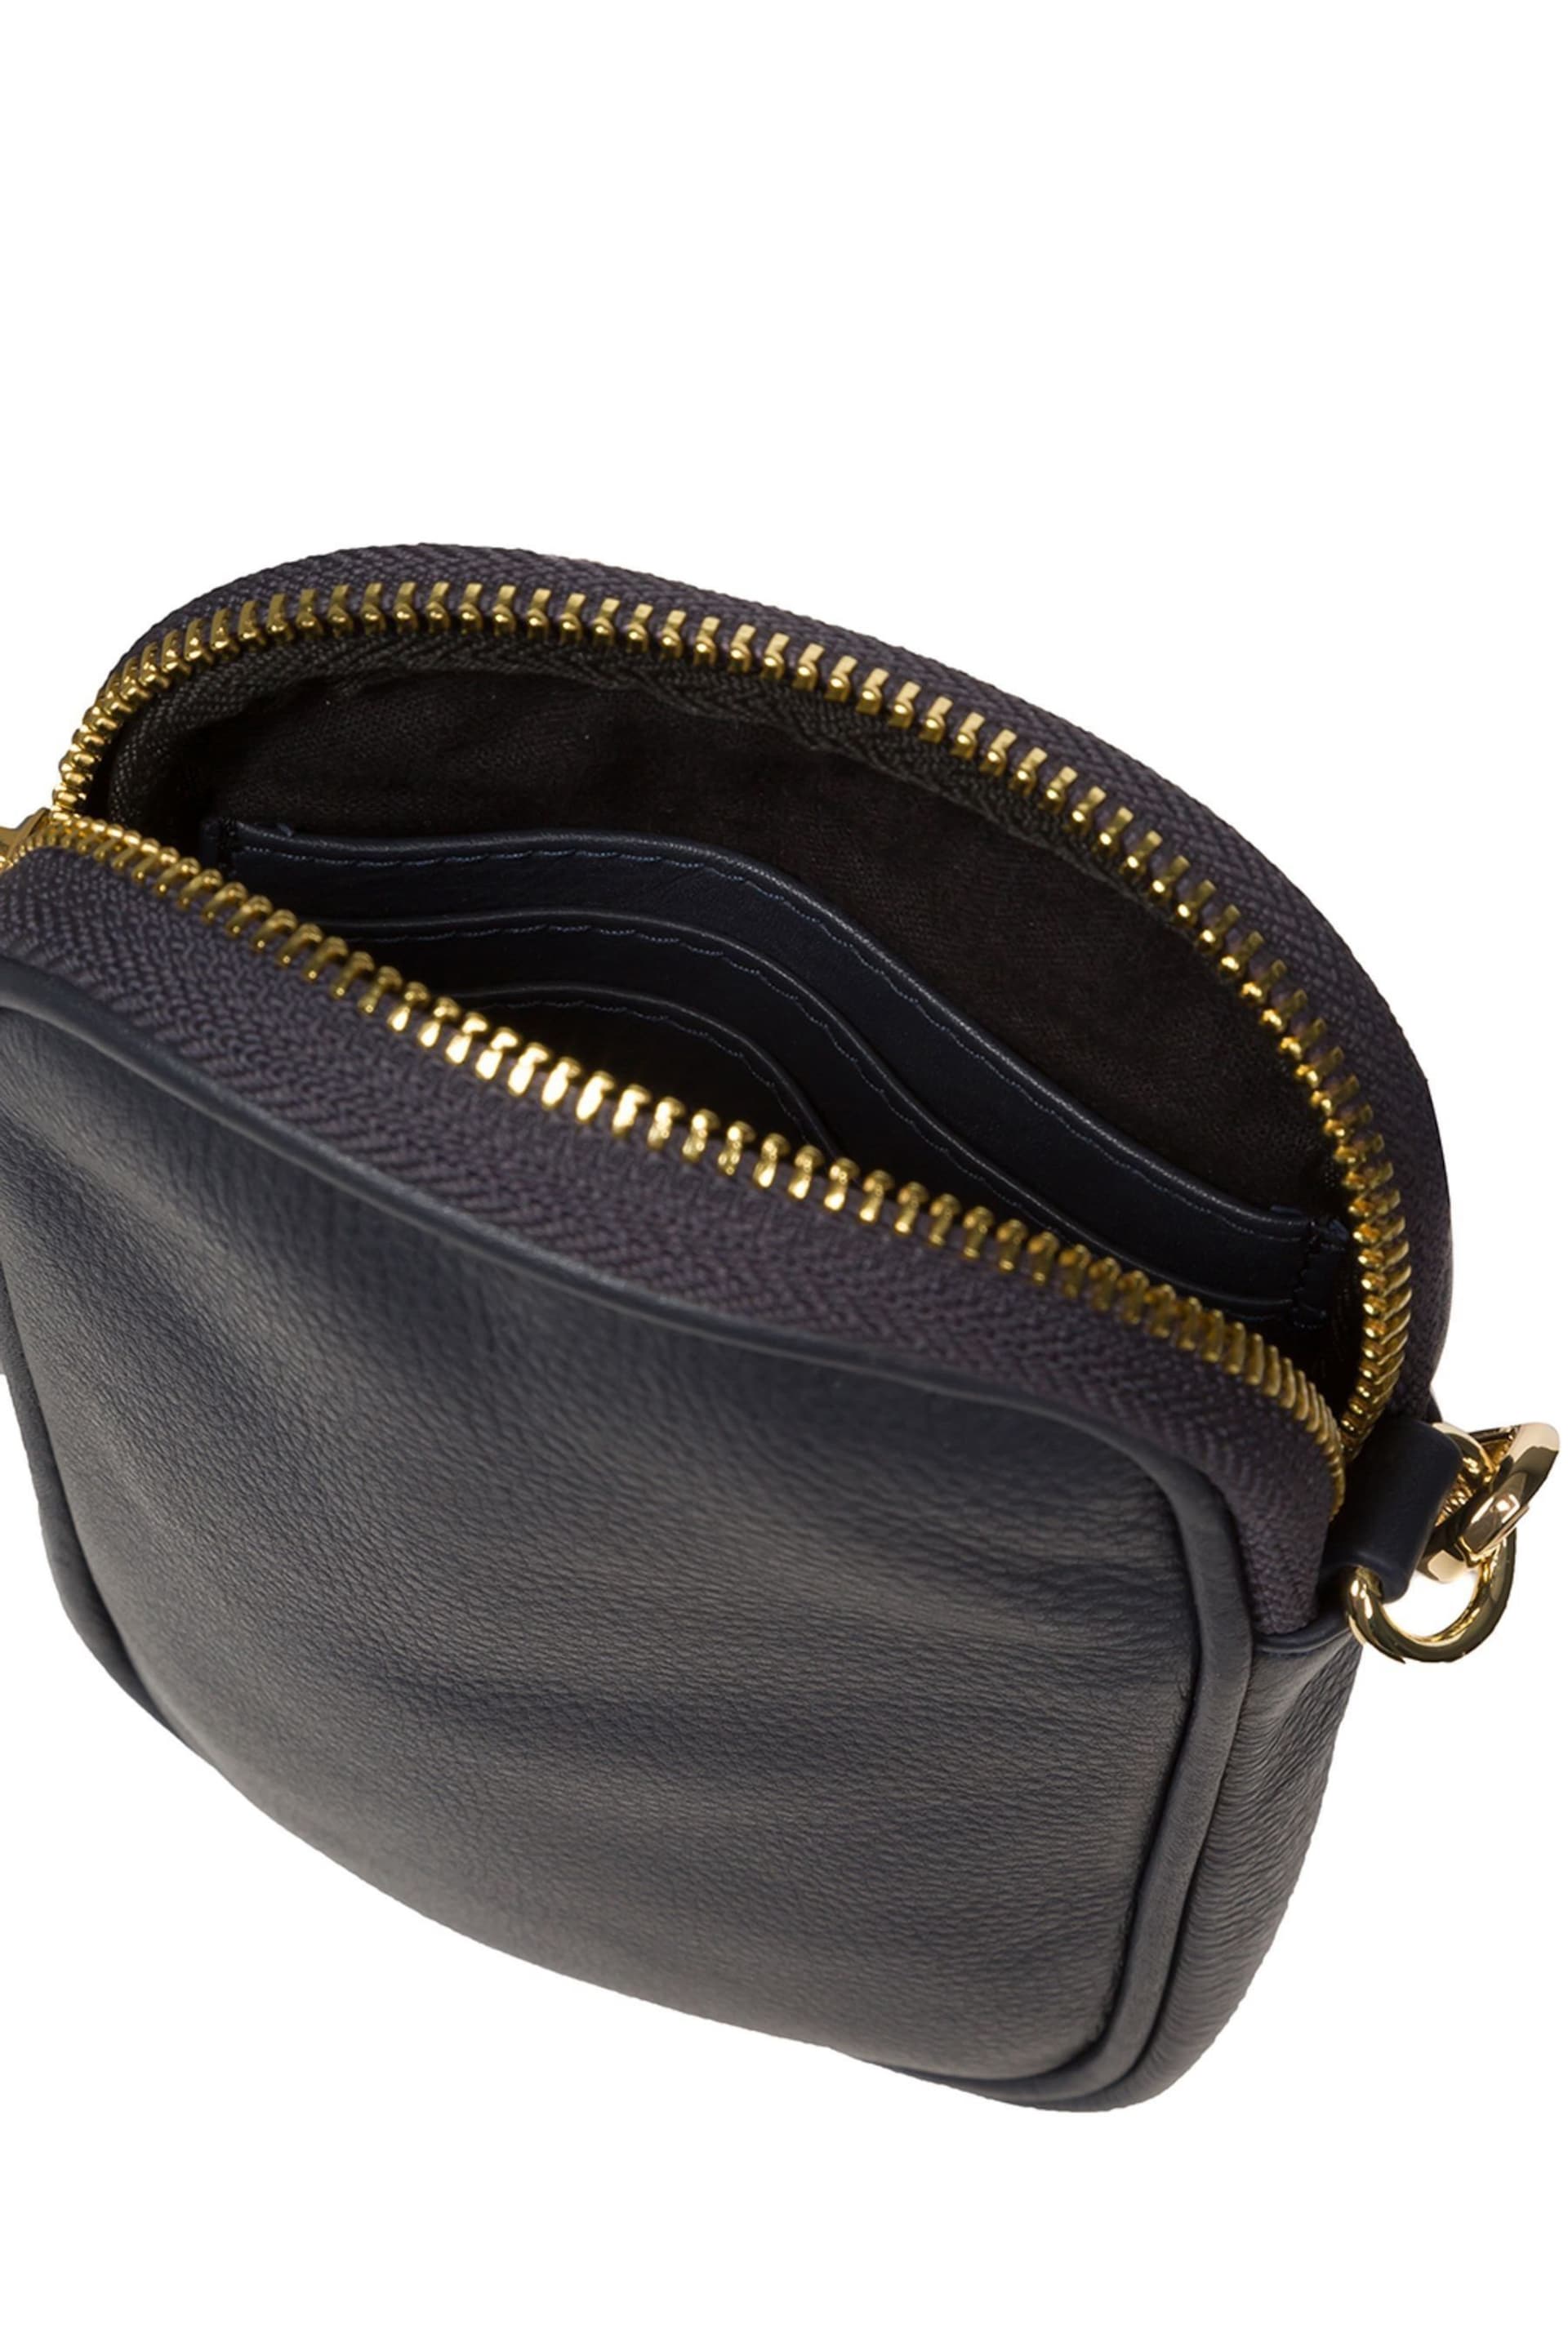 Pure Luxuries London Alaina Nappa Leather Cross-Body Phone Bag - Image 4 of 5